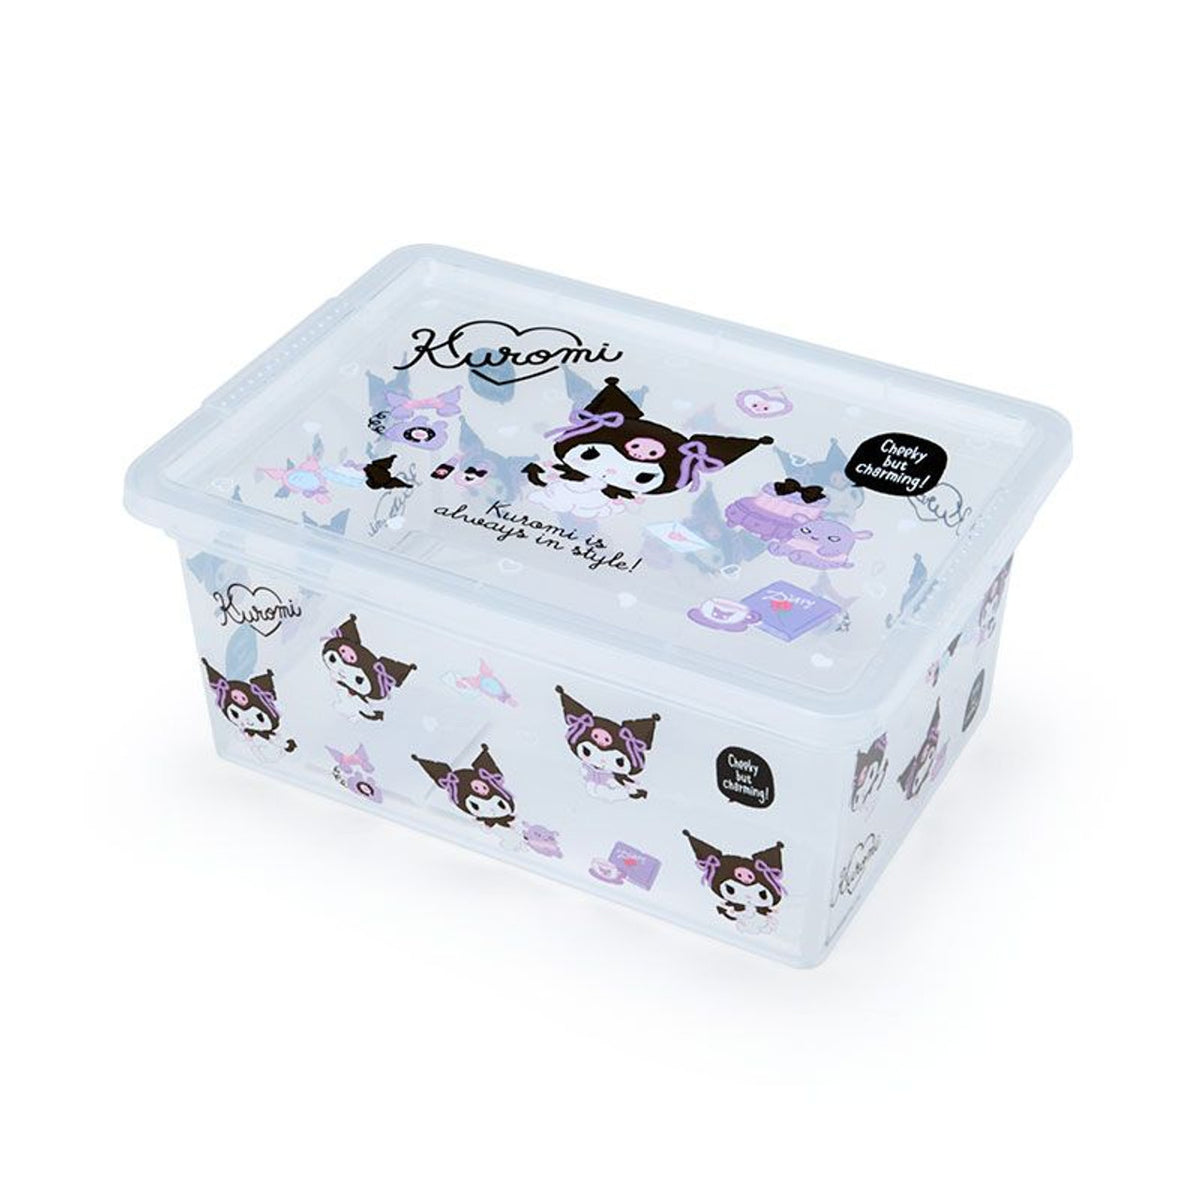 Kuromi Clear Storage Box Home Goods Japan Original   